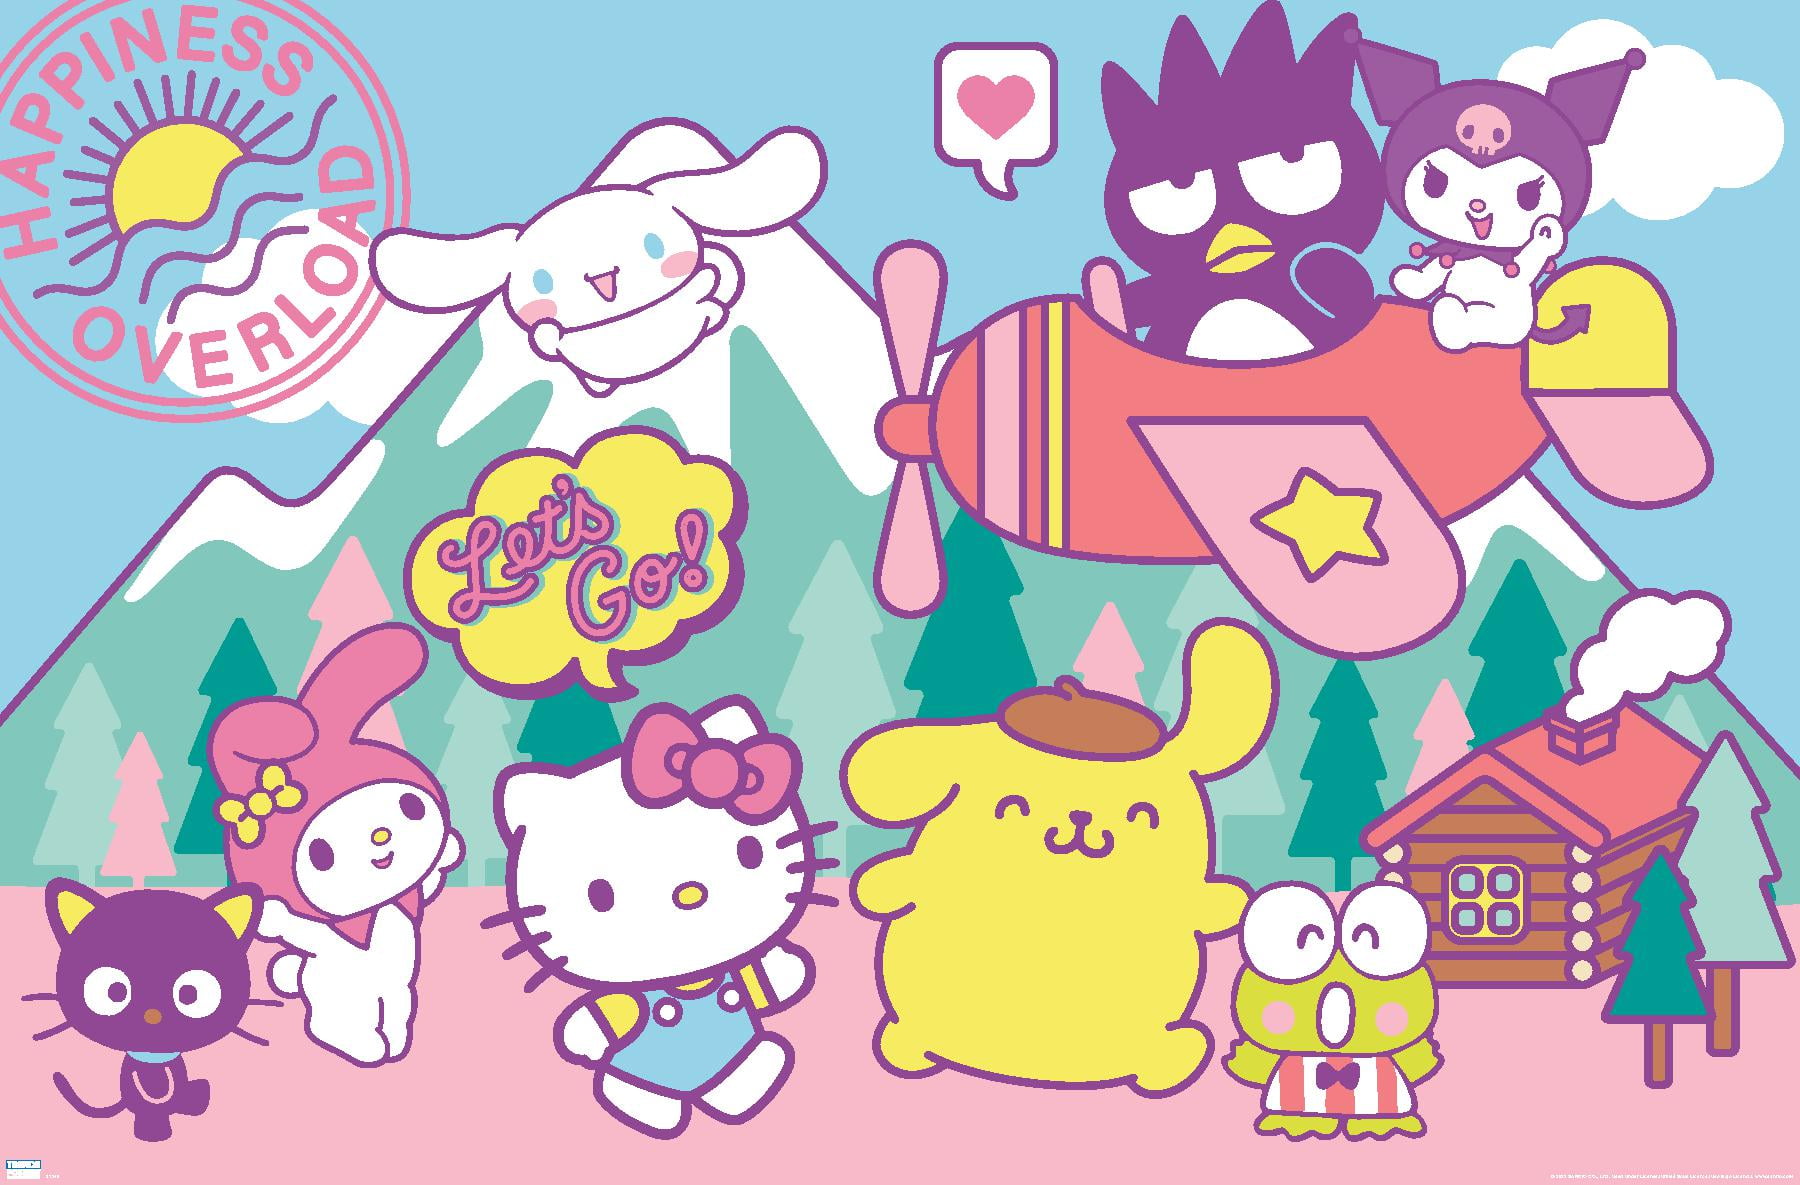 JUMANT Hello Kitty Tapestry - Sanrio Room Decor - Hello Kitty Room Decor - Hello  Kitty Birthday Decorations - Kawaii Decor - Hel